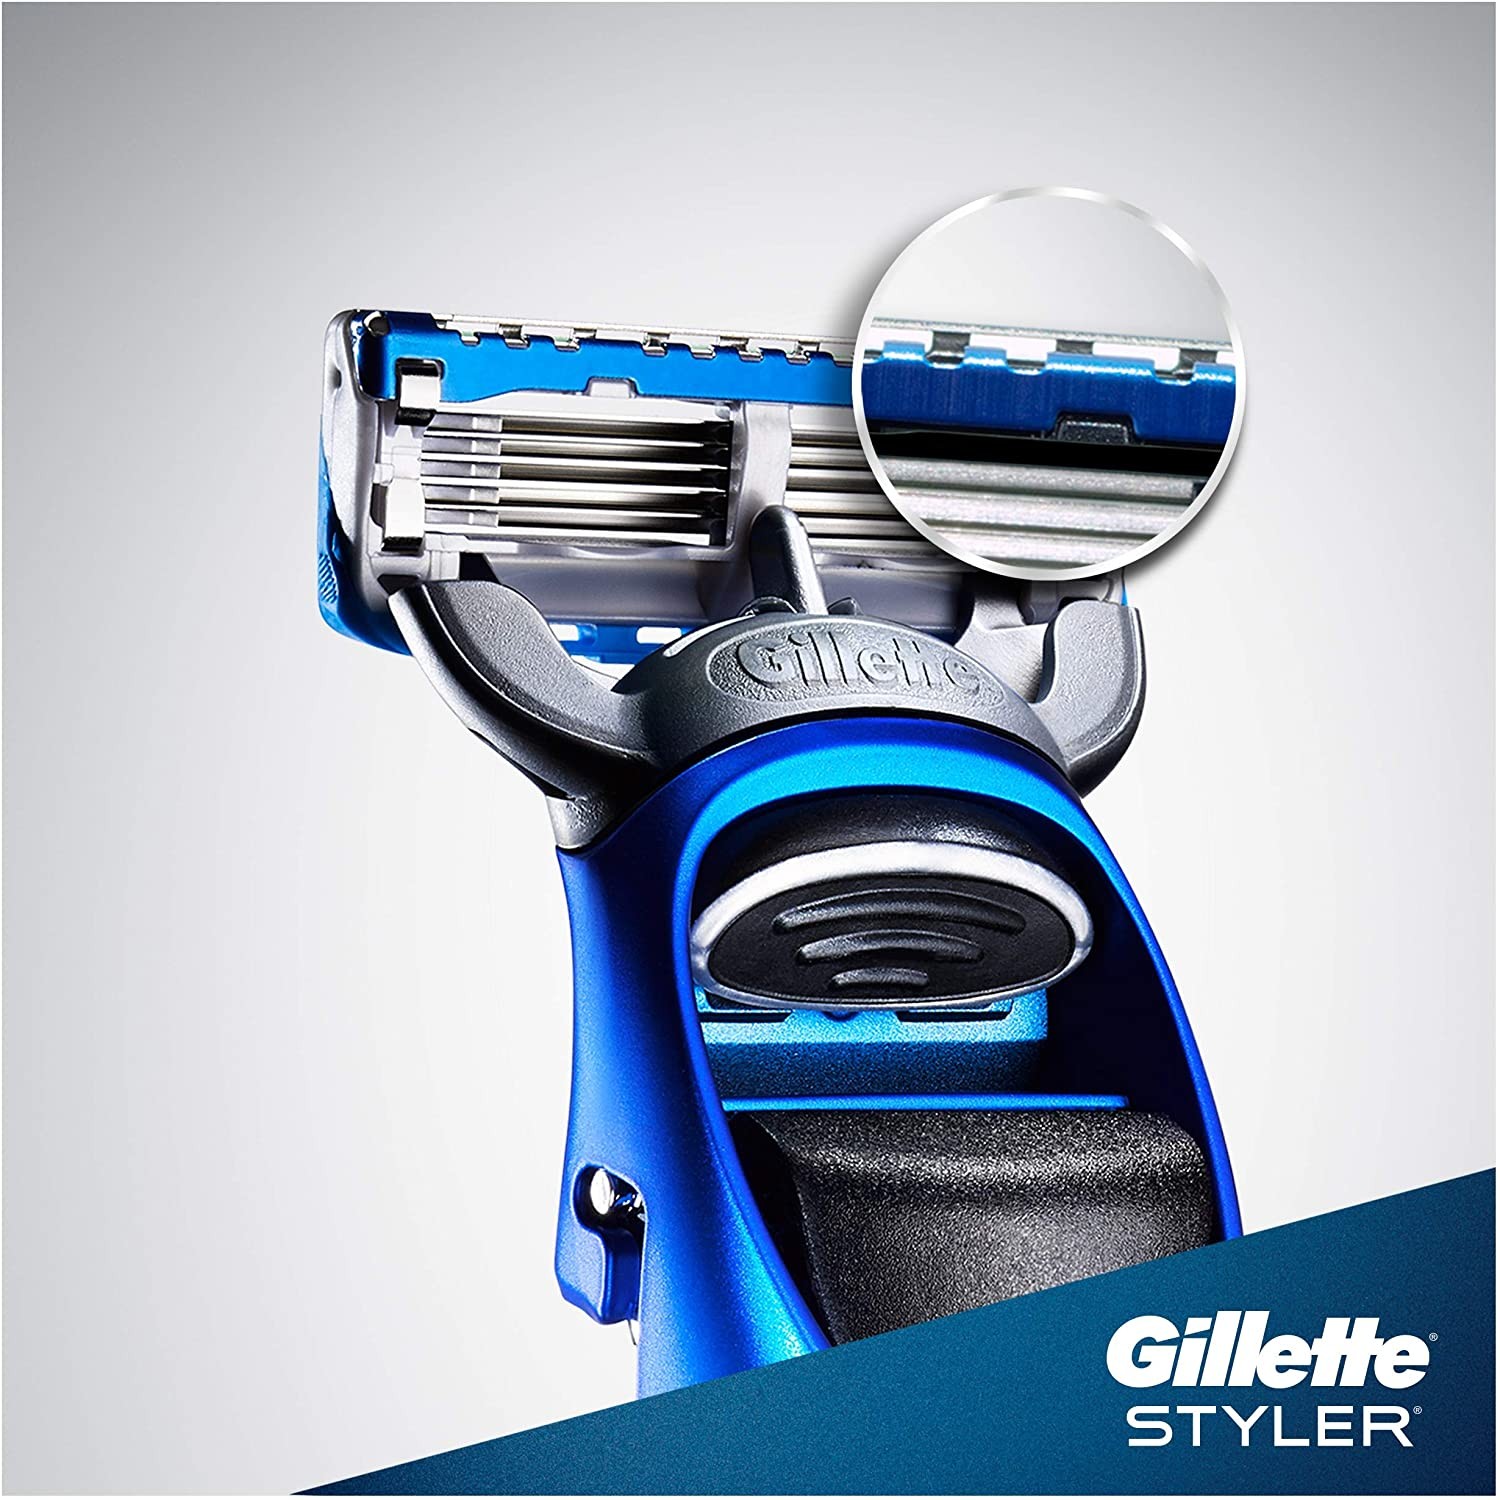 Gillette ProGlide Styler 1up Shaving Edge Shaver 4 Trimming Levels